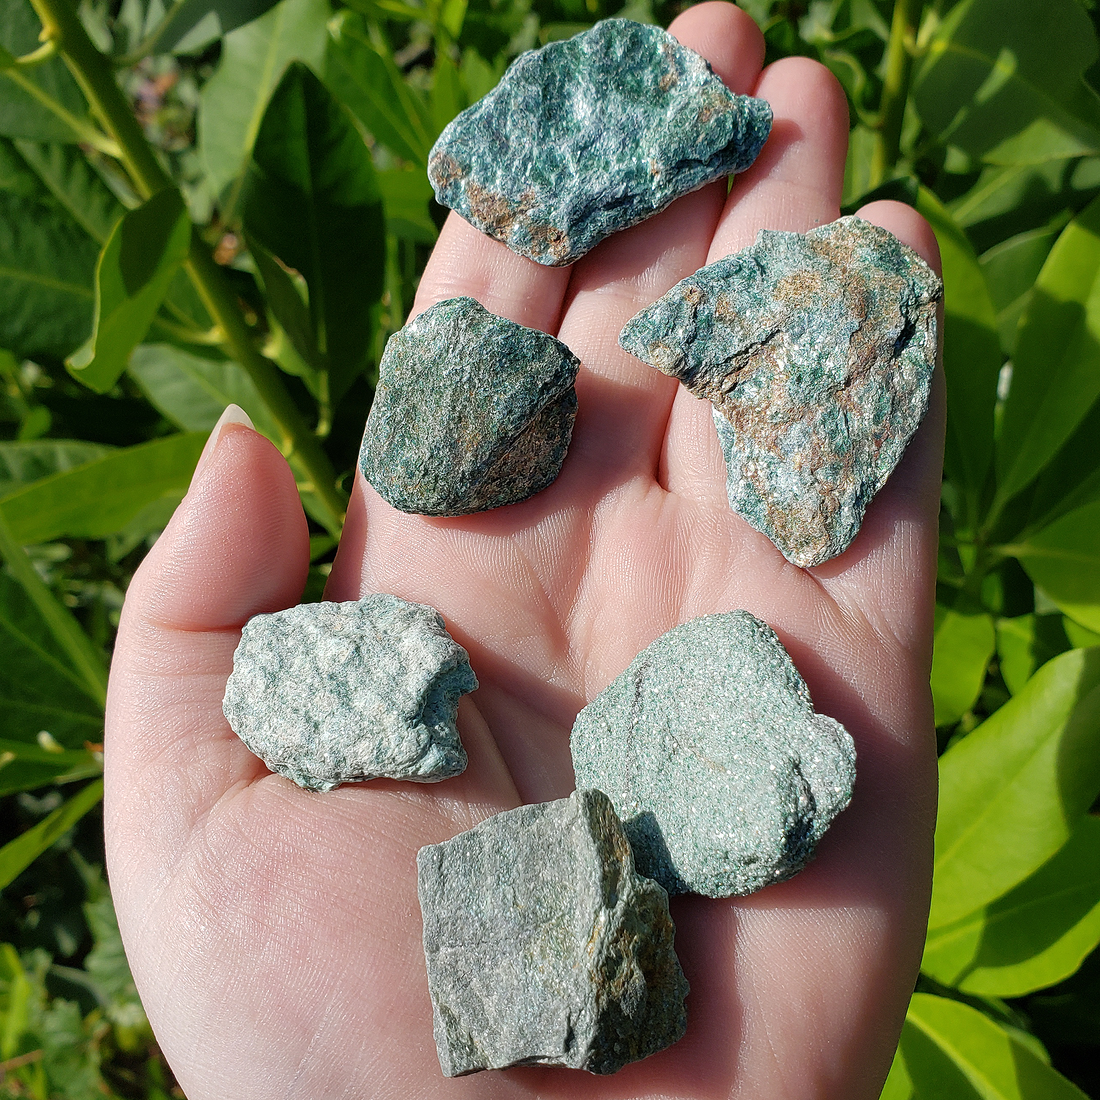 Raw Fuchsite Muscovite Mica Natural Rough Gemstone - Small One Stone - In Hand in Sunlight